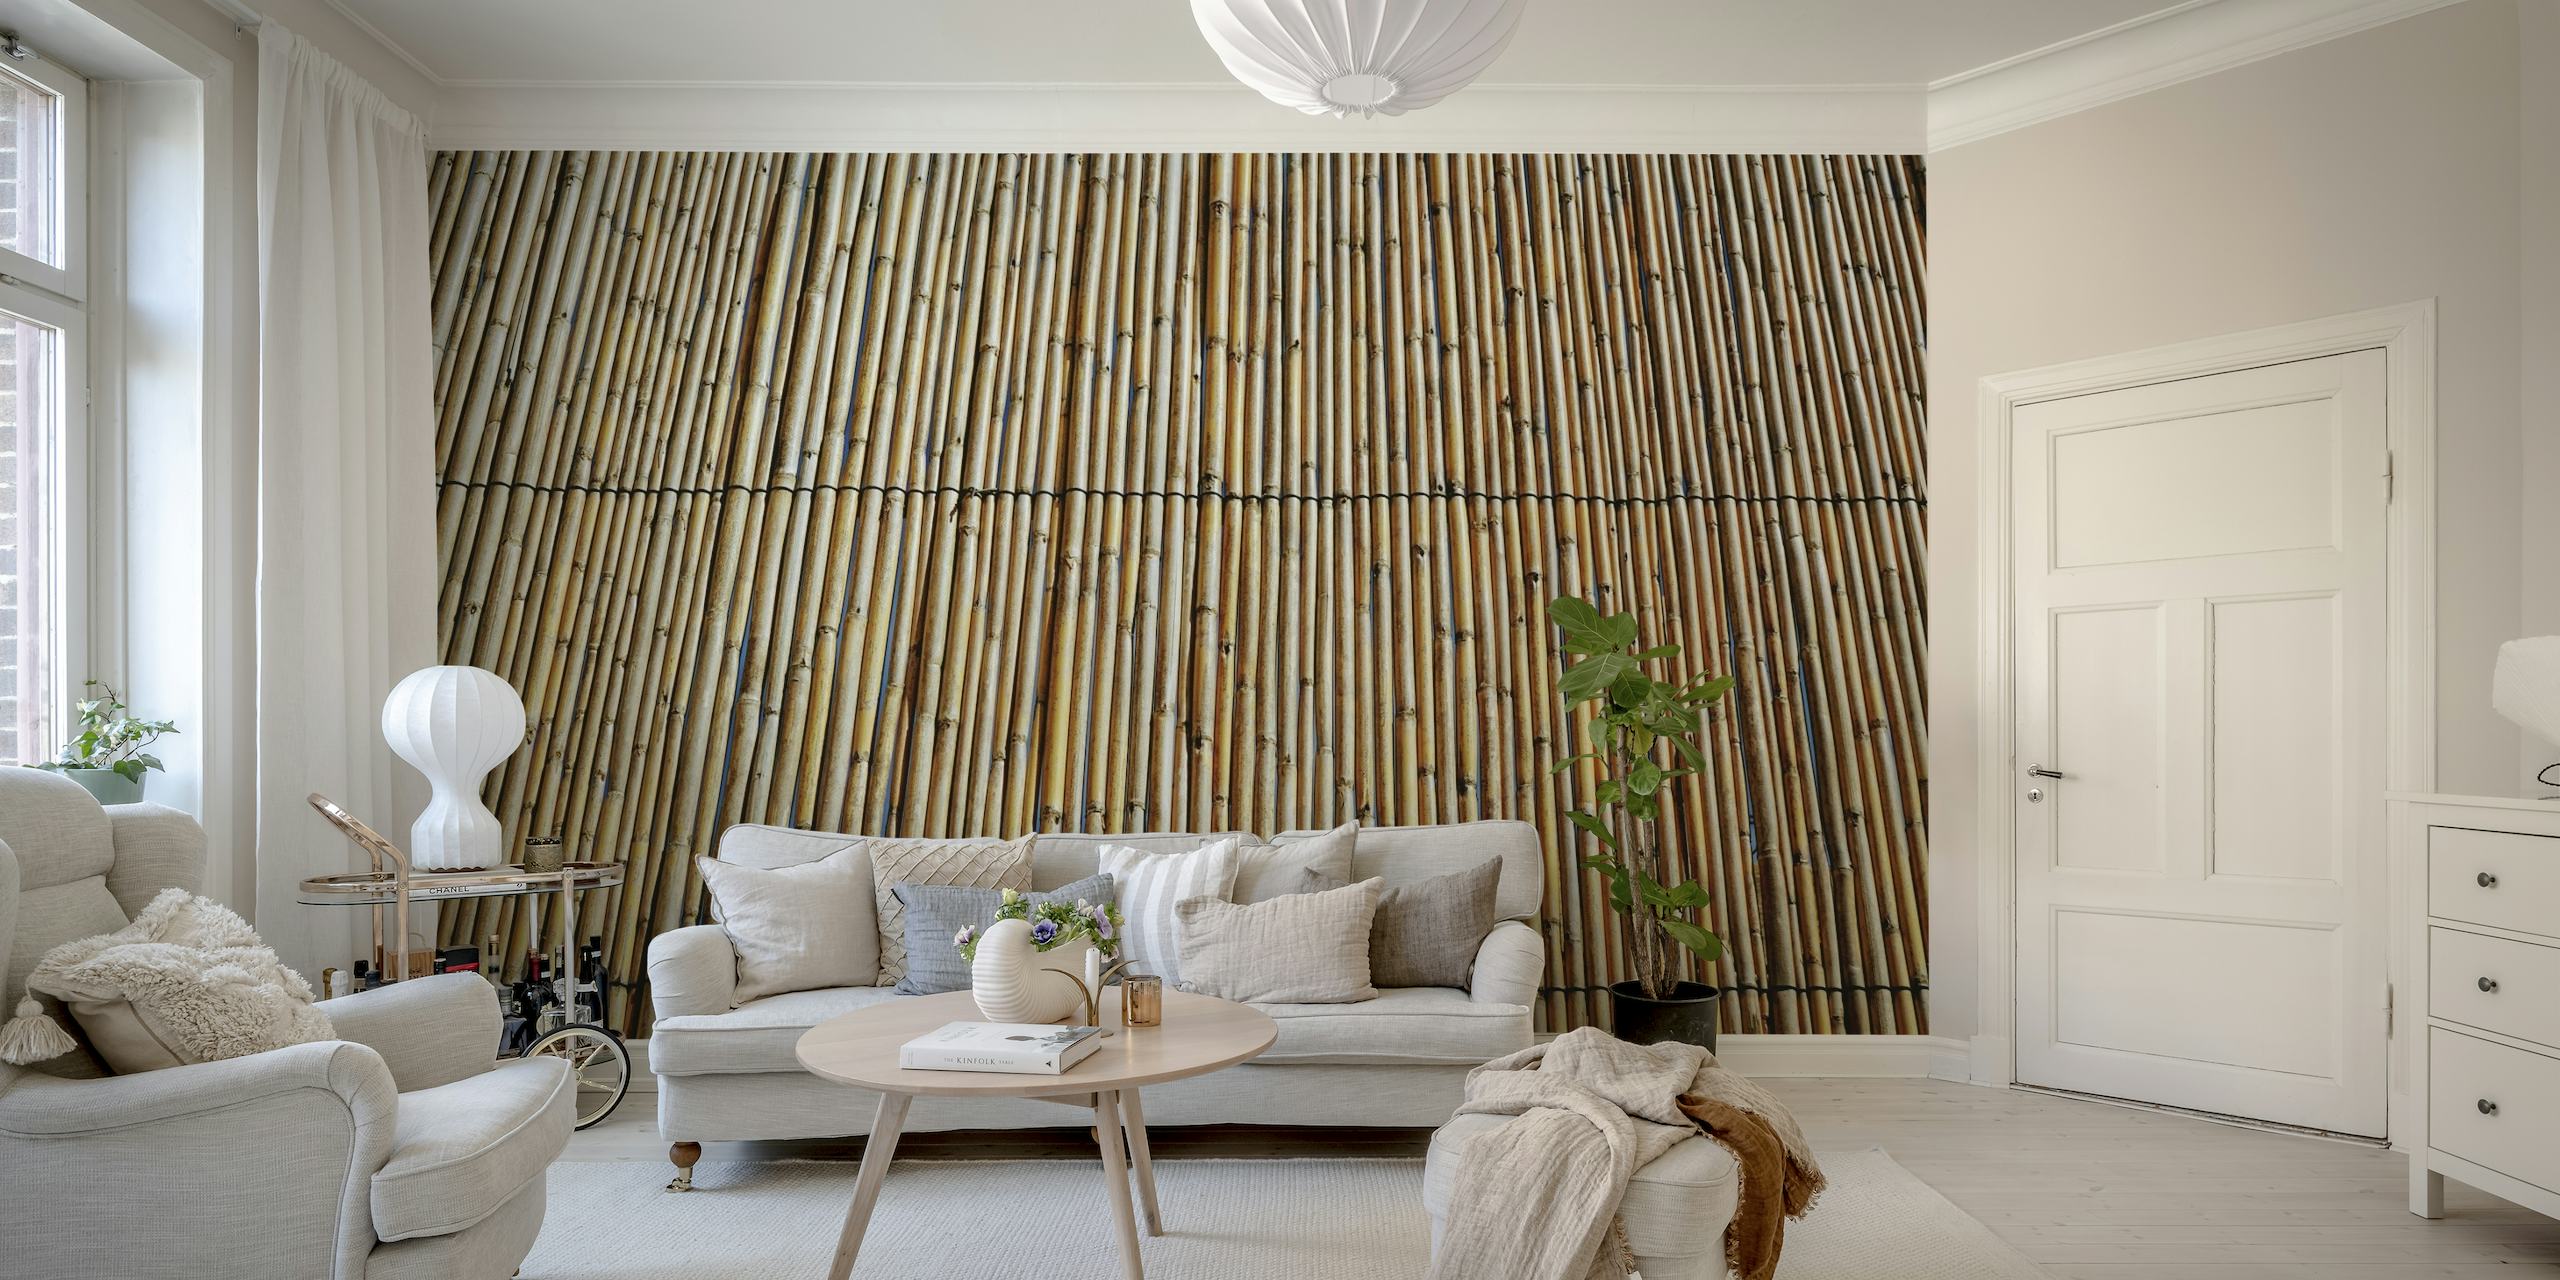 Wooden Bamboo Wall behang